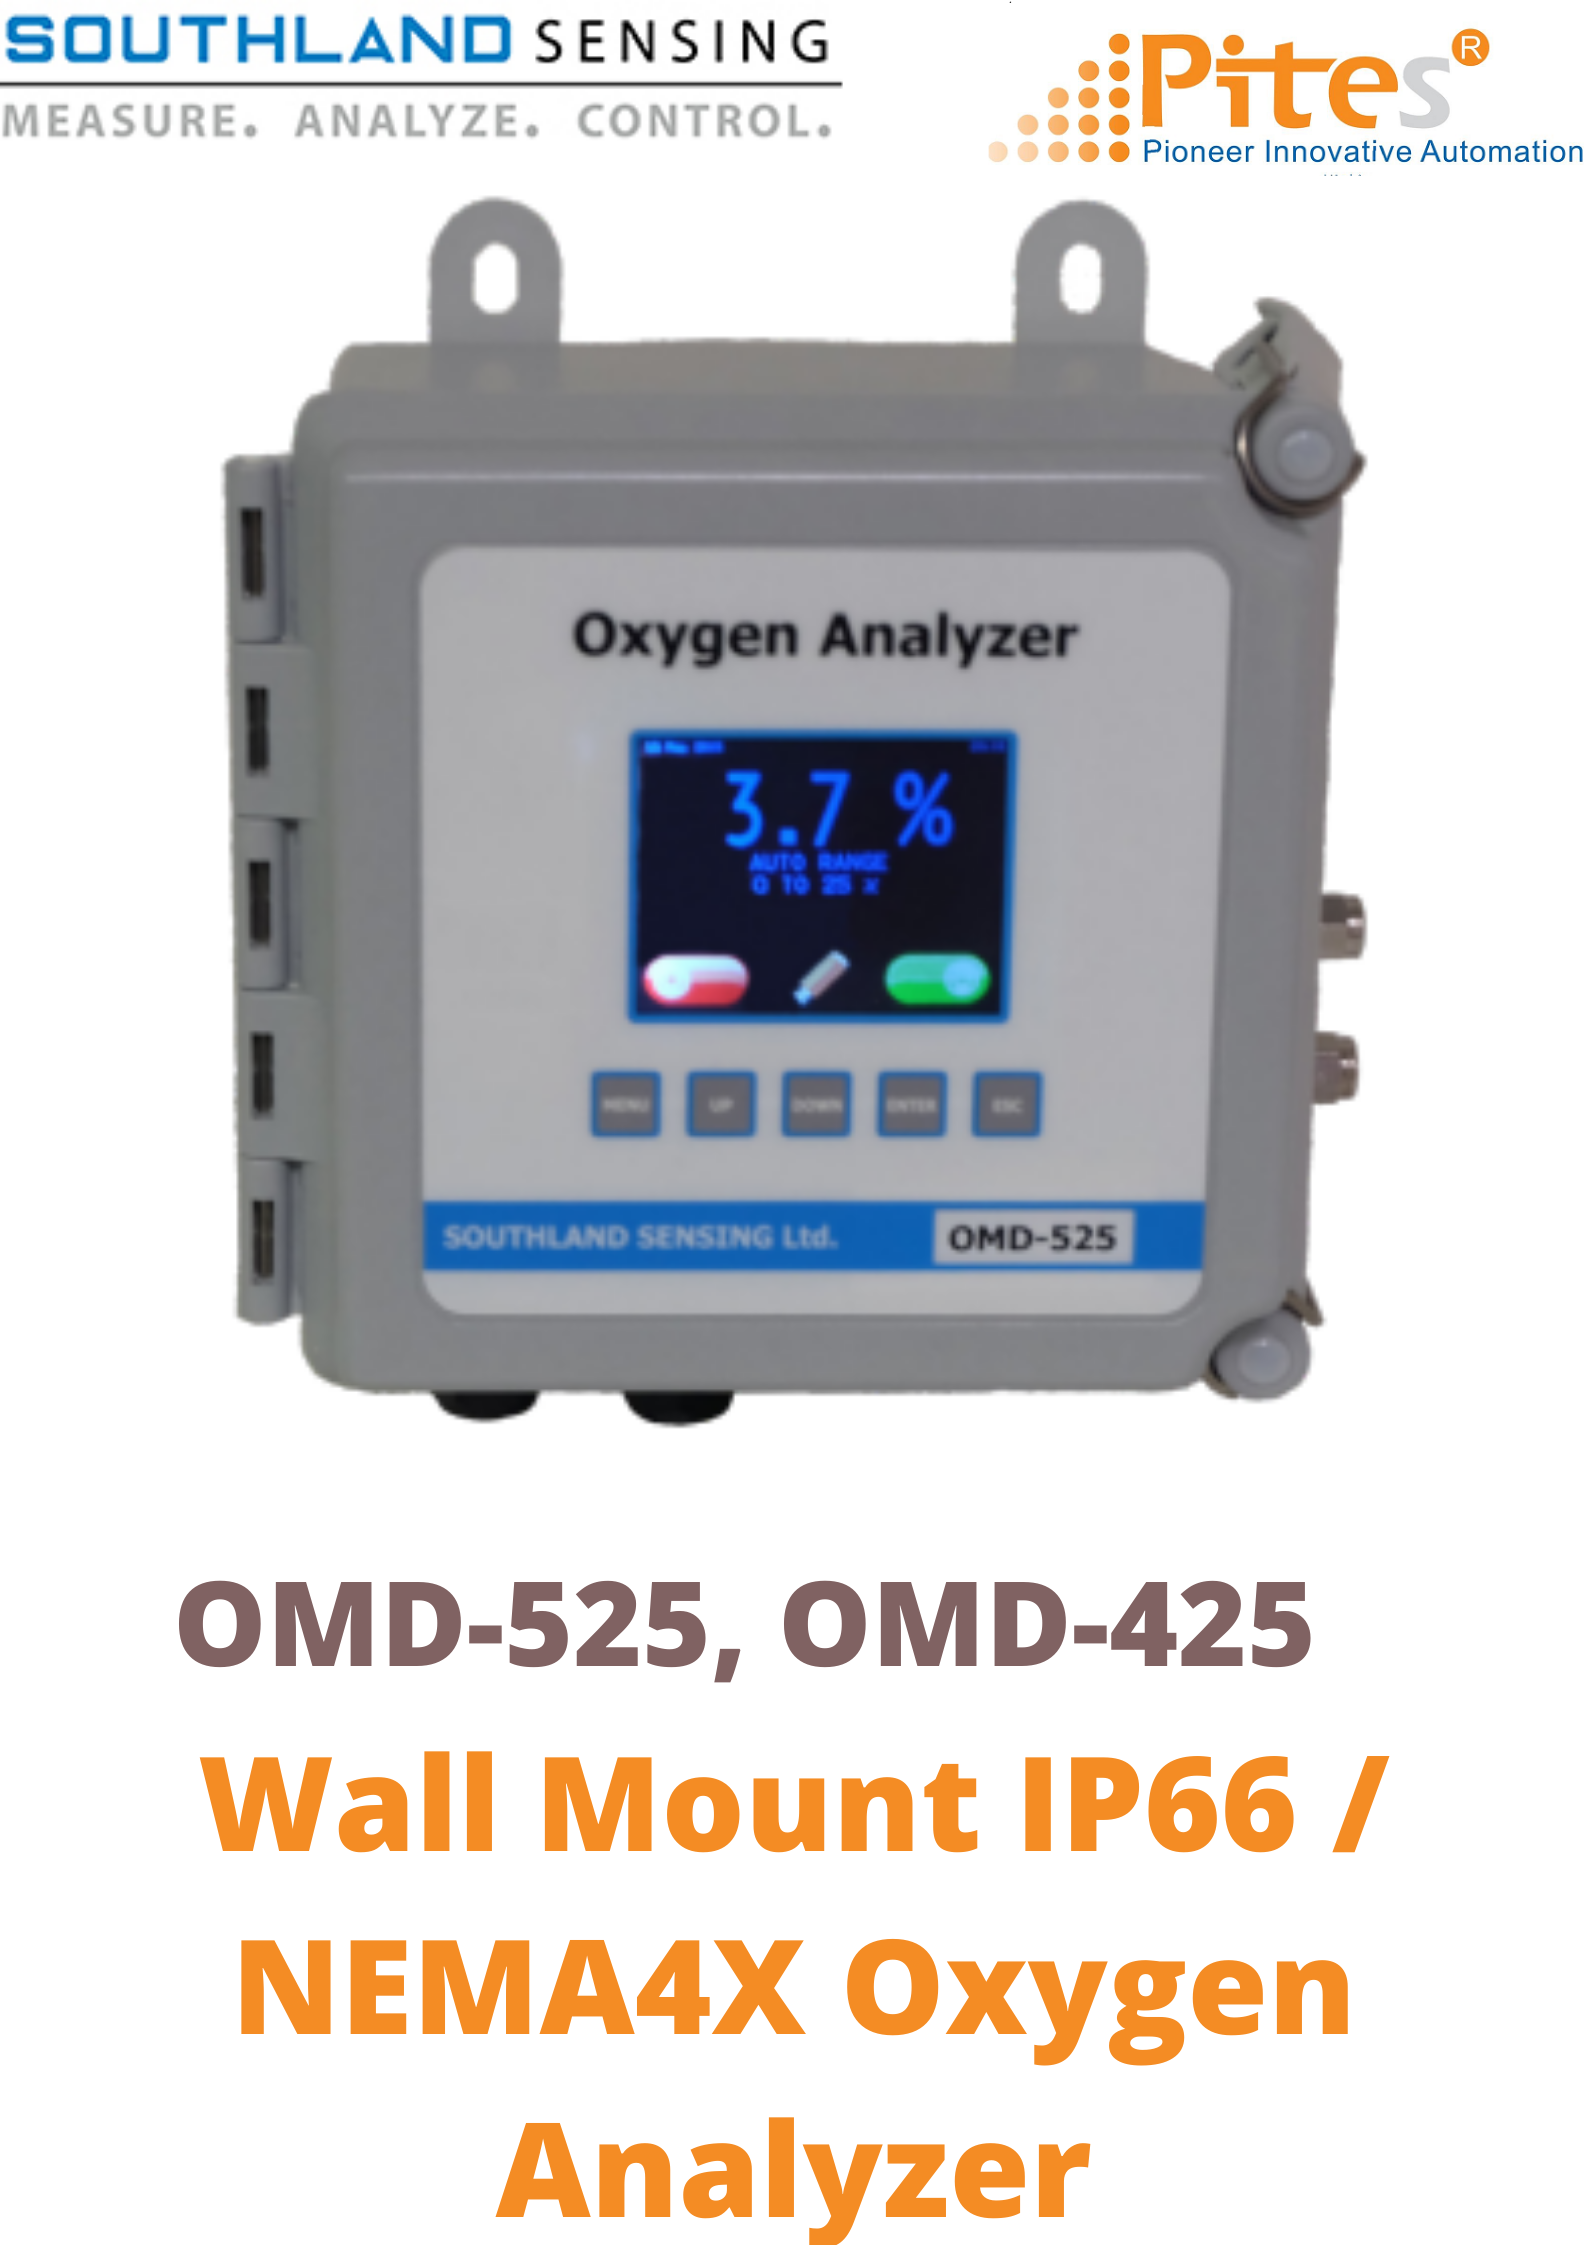 omd-525-omd-425-wall-mount-ip66-nema4x-oxygen-analyzer-southland-sensing-sso2-viet-nam.png